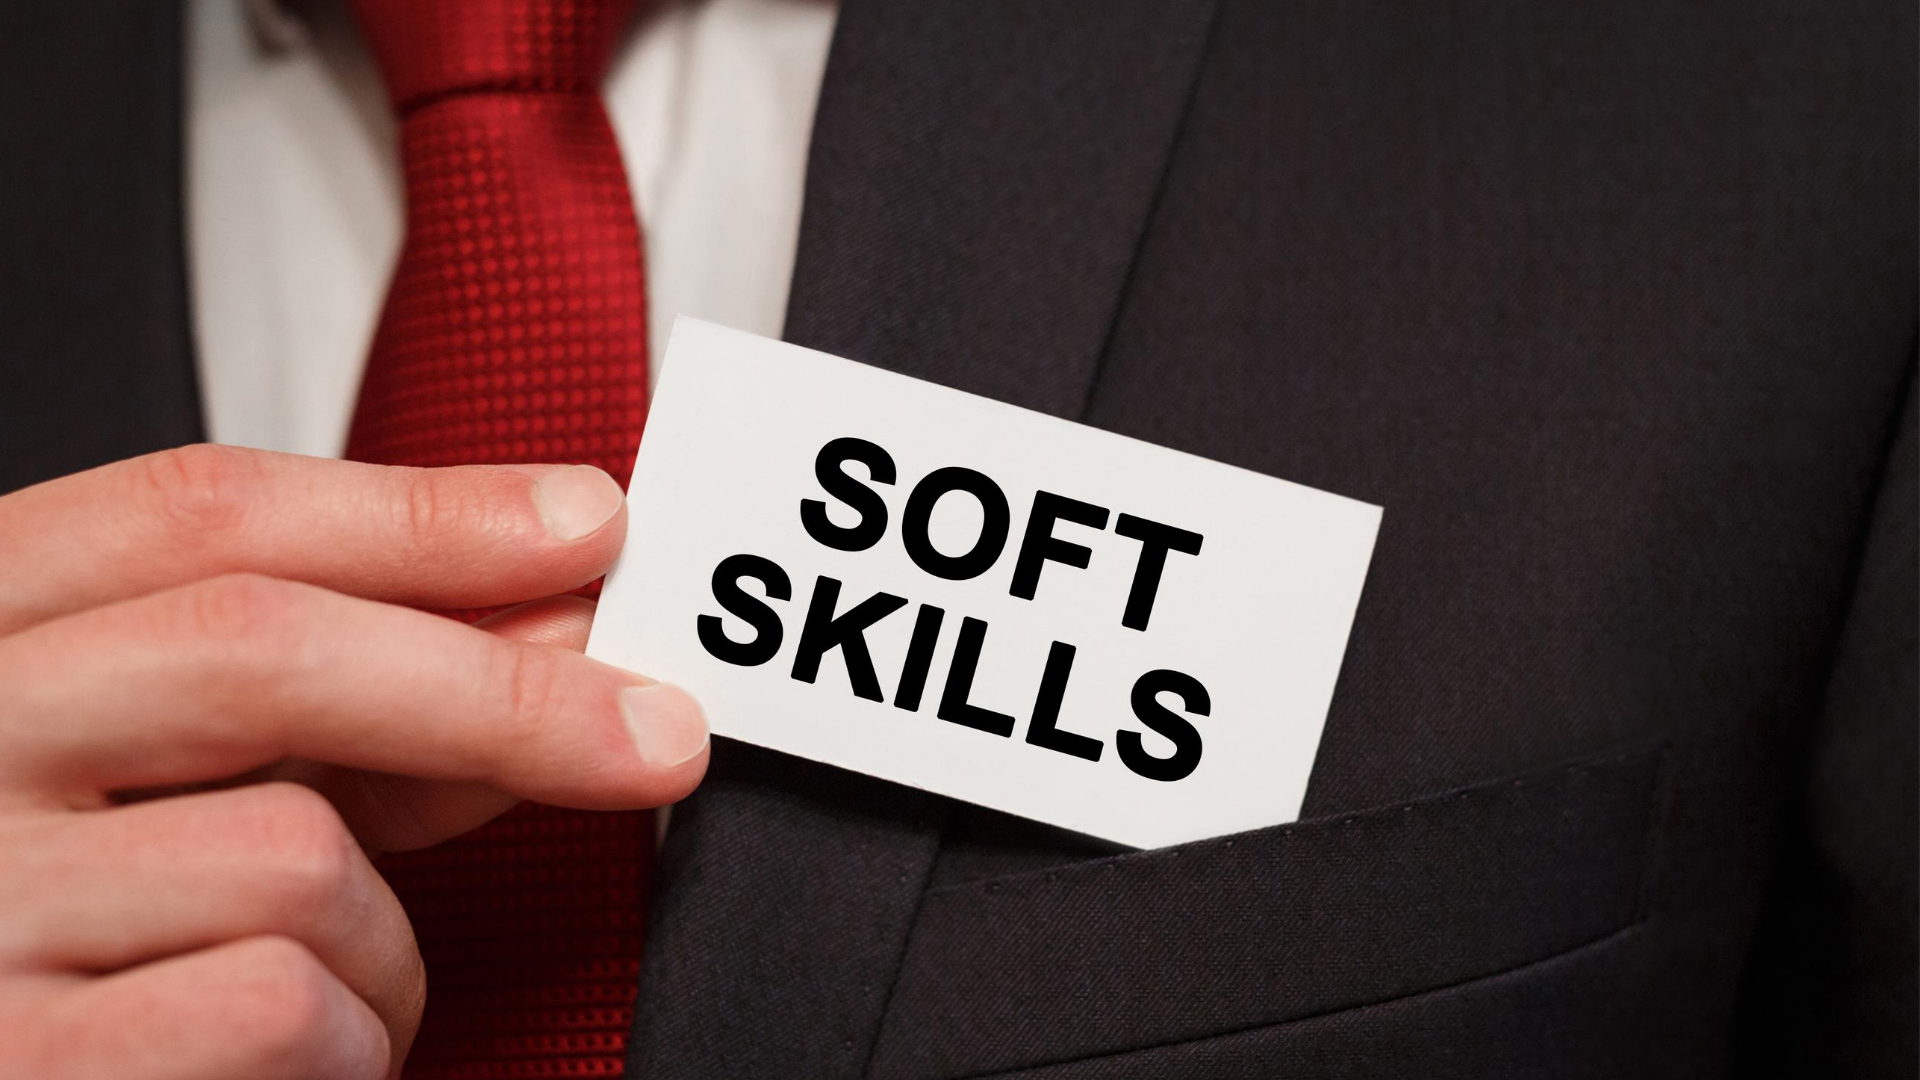 Importance of Soft Skills